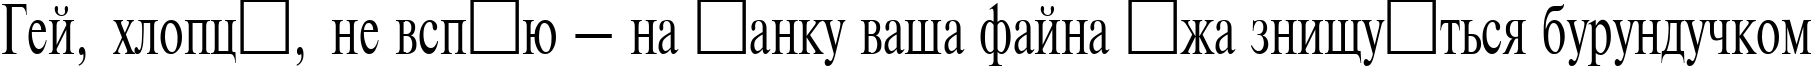 Пример написания шрифтом TimesET65n текста на украинском